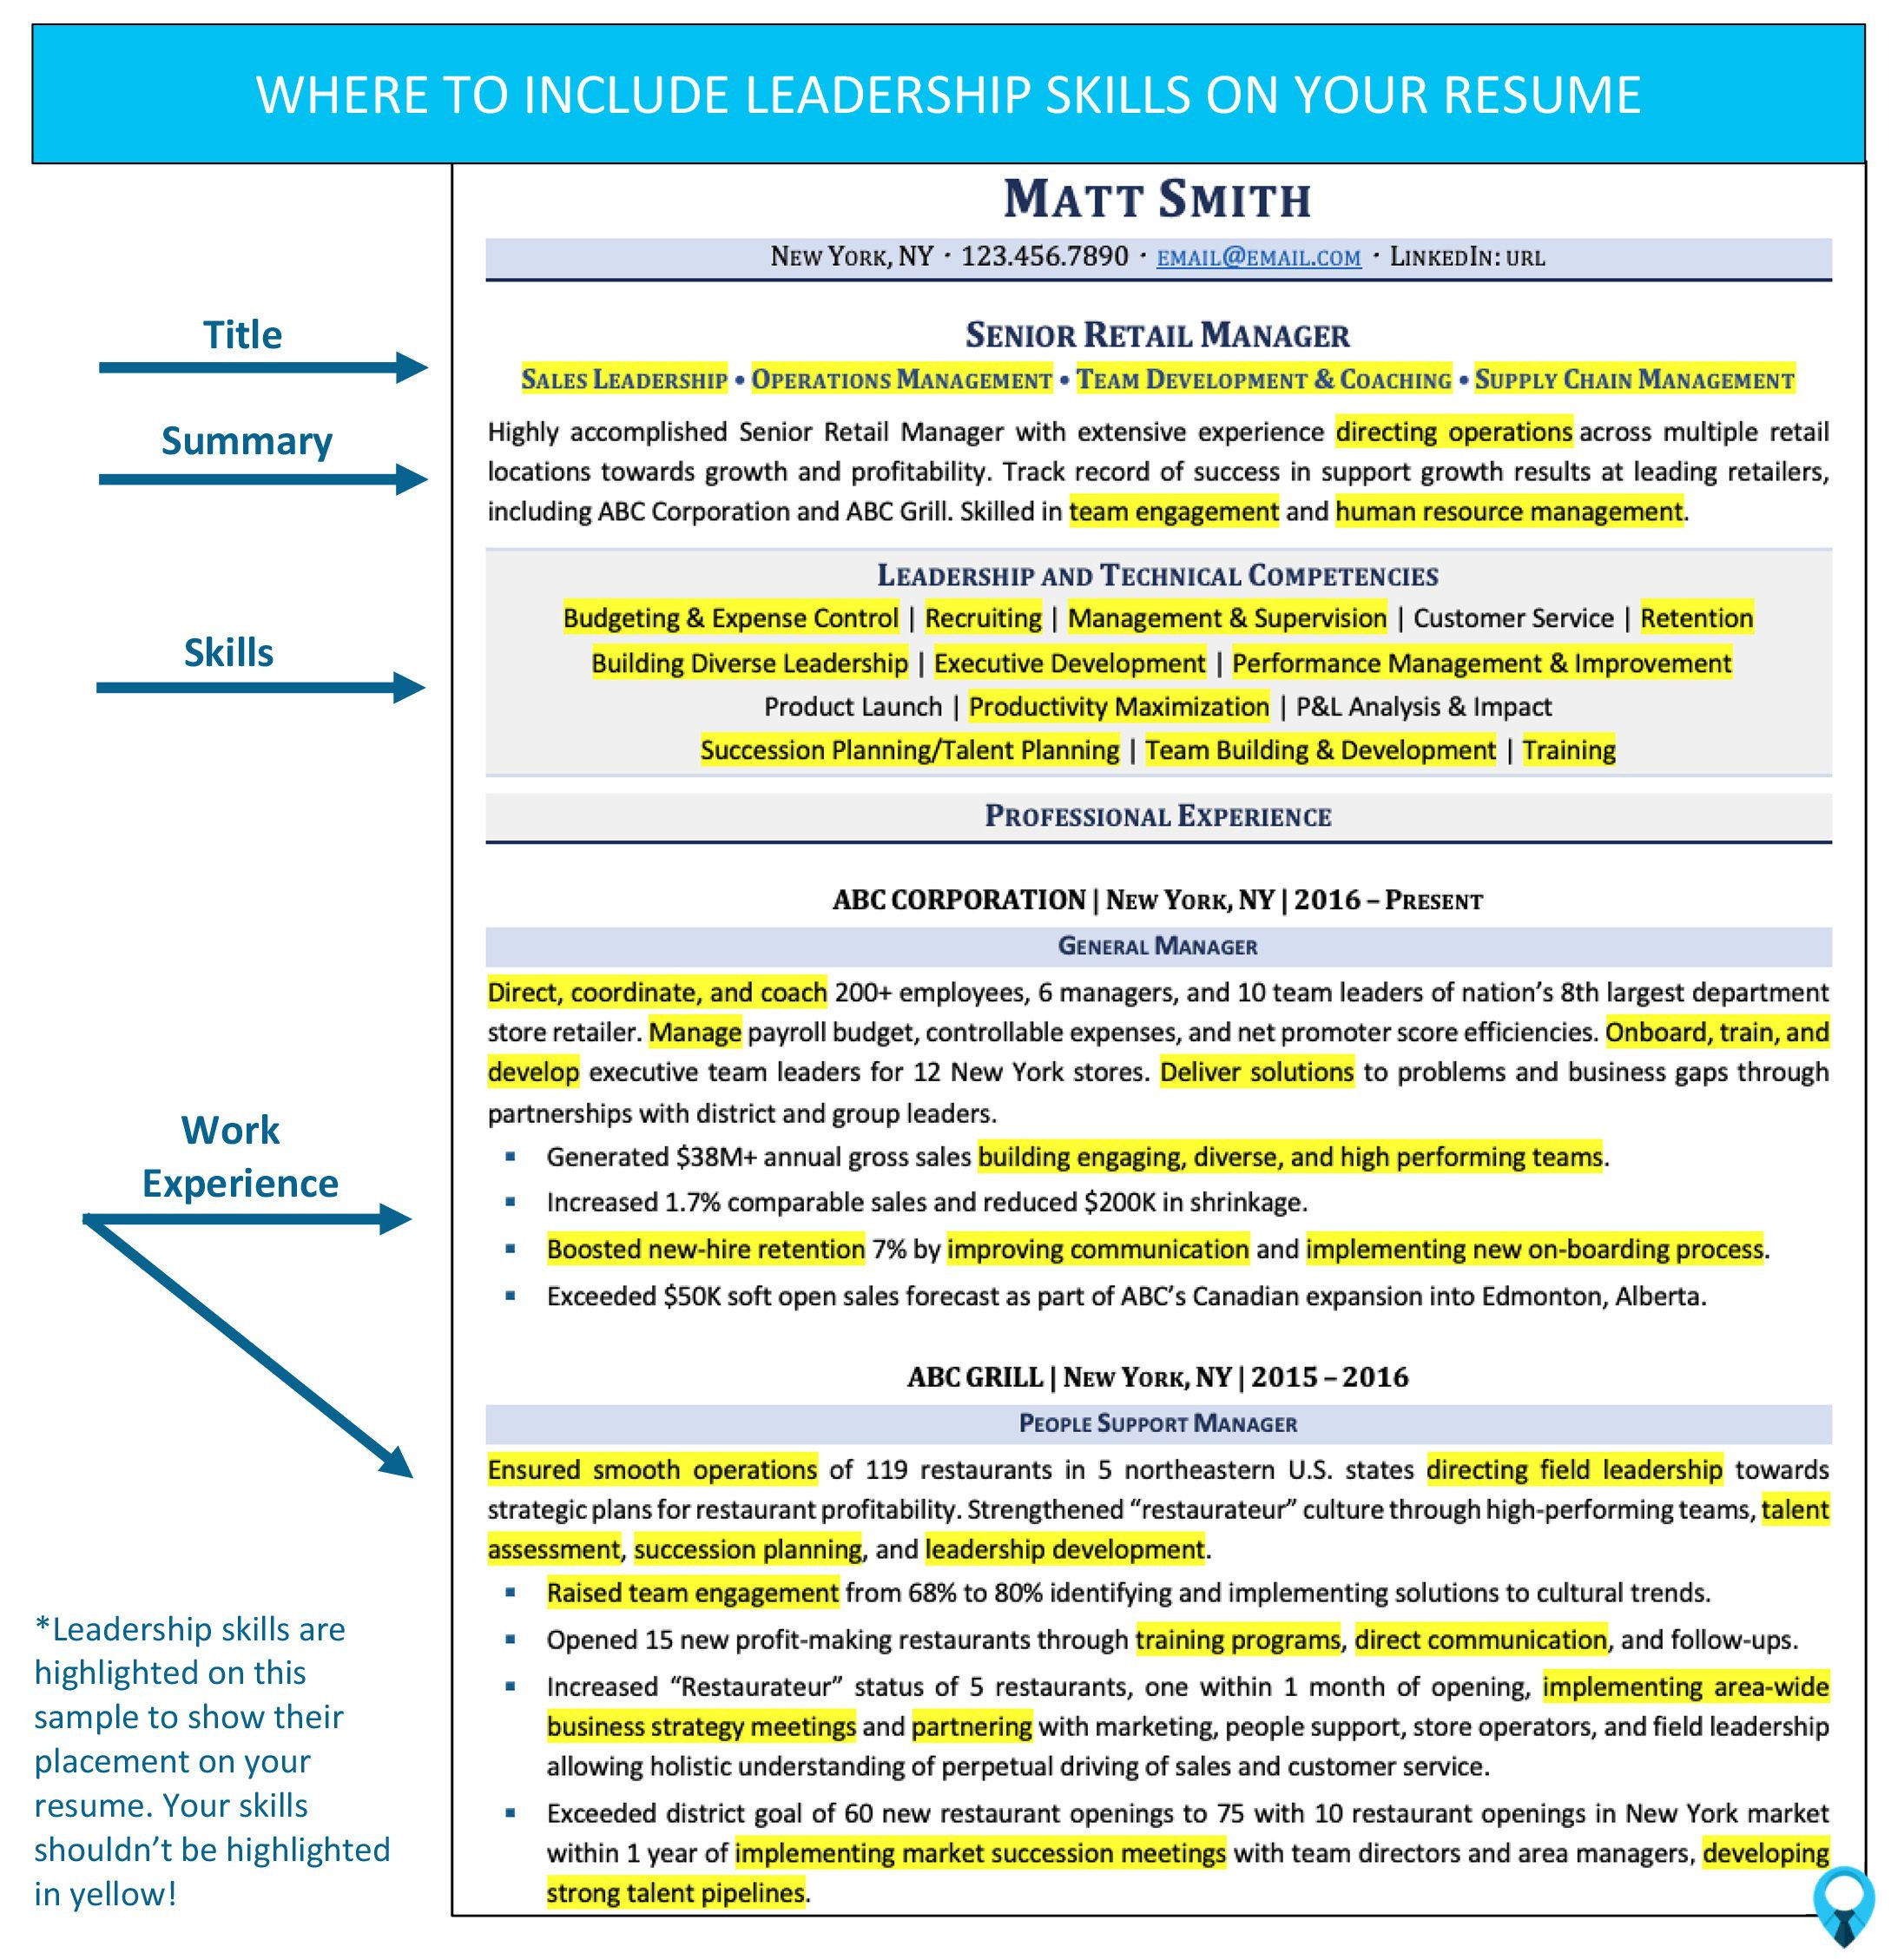 Sample Resume Skills In A List 45 Key Leadership Skills for A Resume (all Industries)